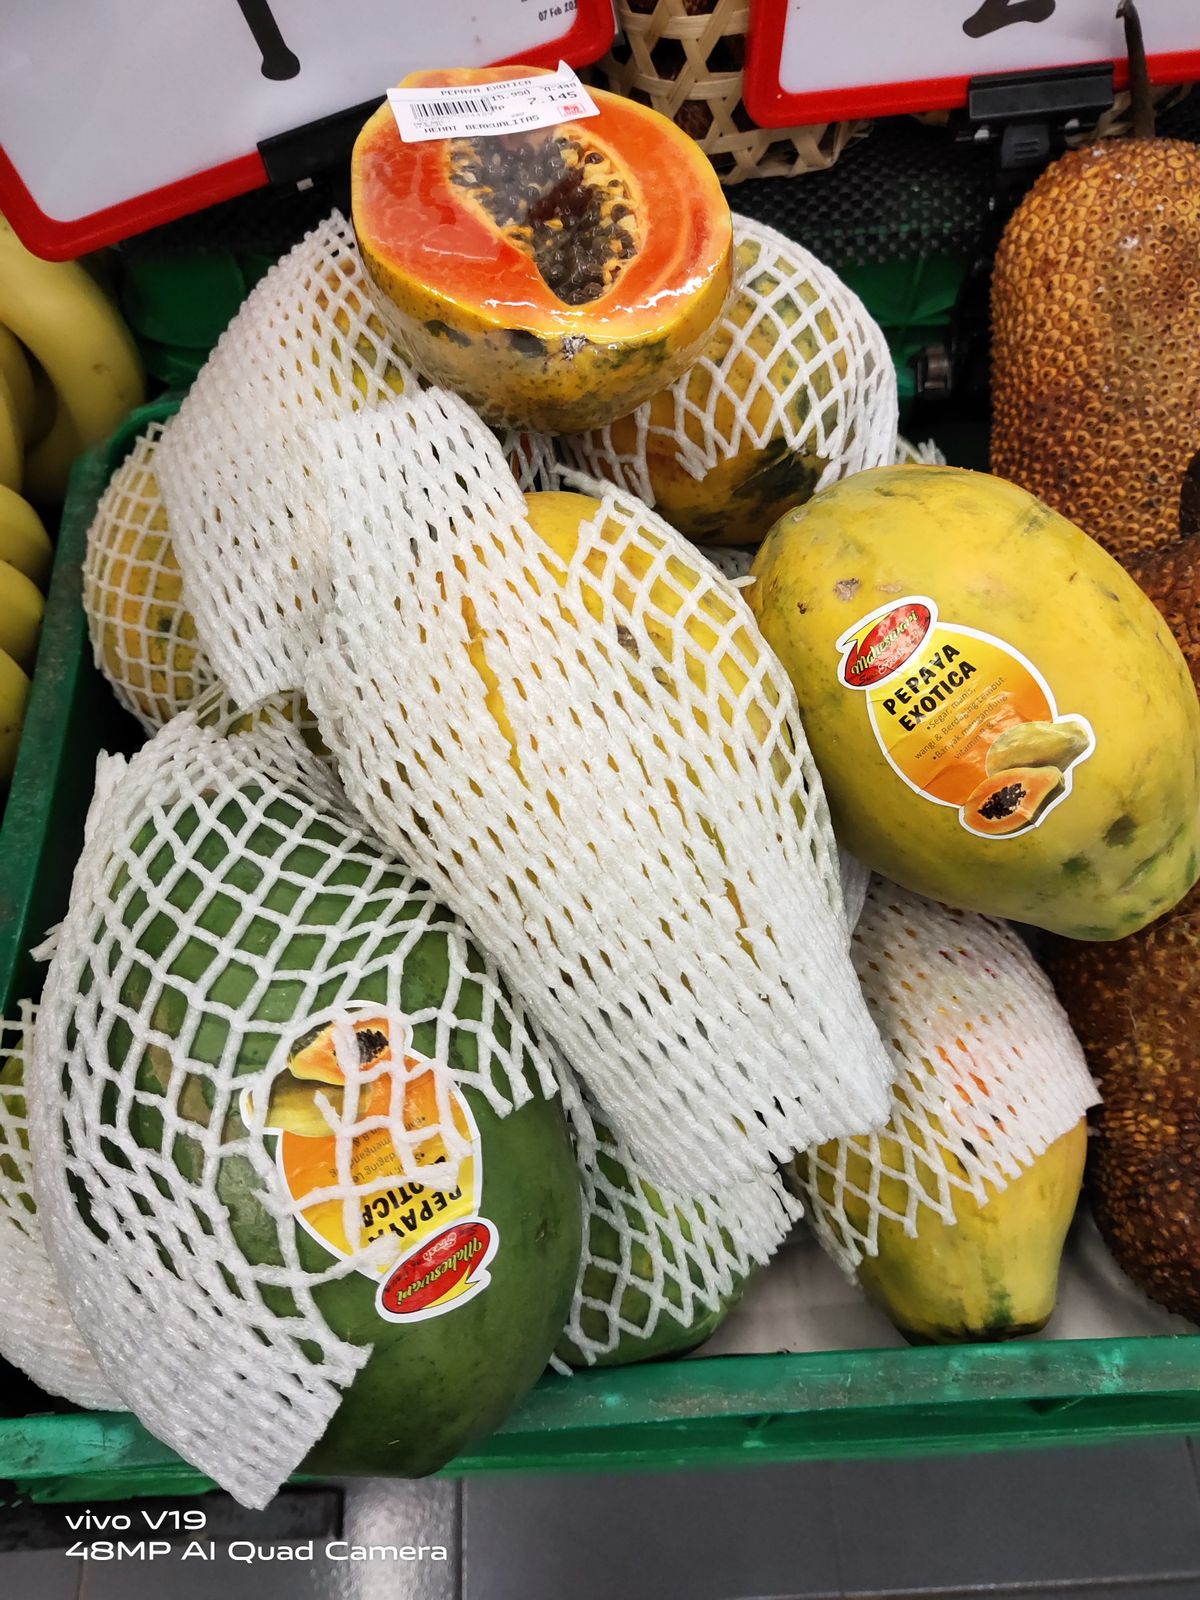 Fragola Papaya (Alba)